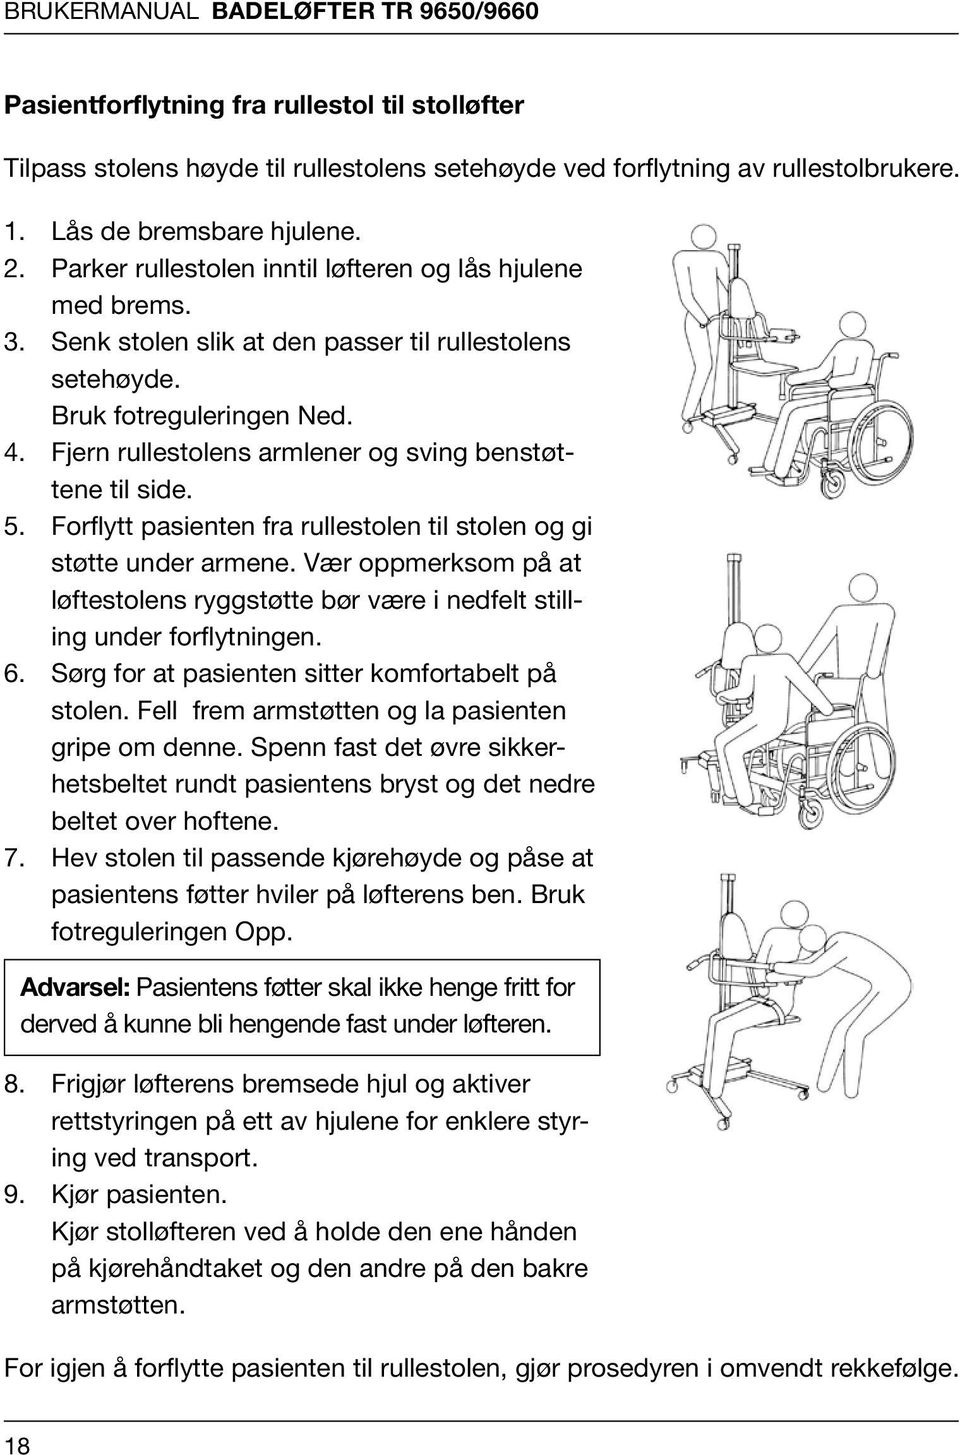 håndtering Rullestol til Stolløfter - Badeløft med stol Pasientforflytning fra Rullestol til Stolløfter 2.